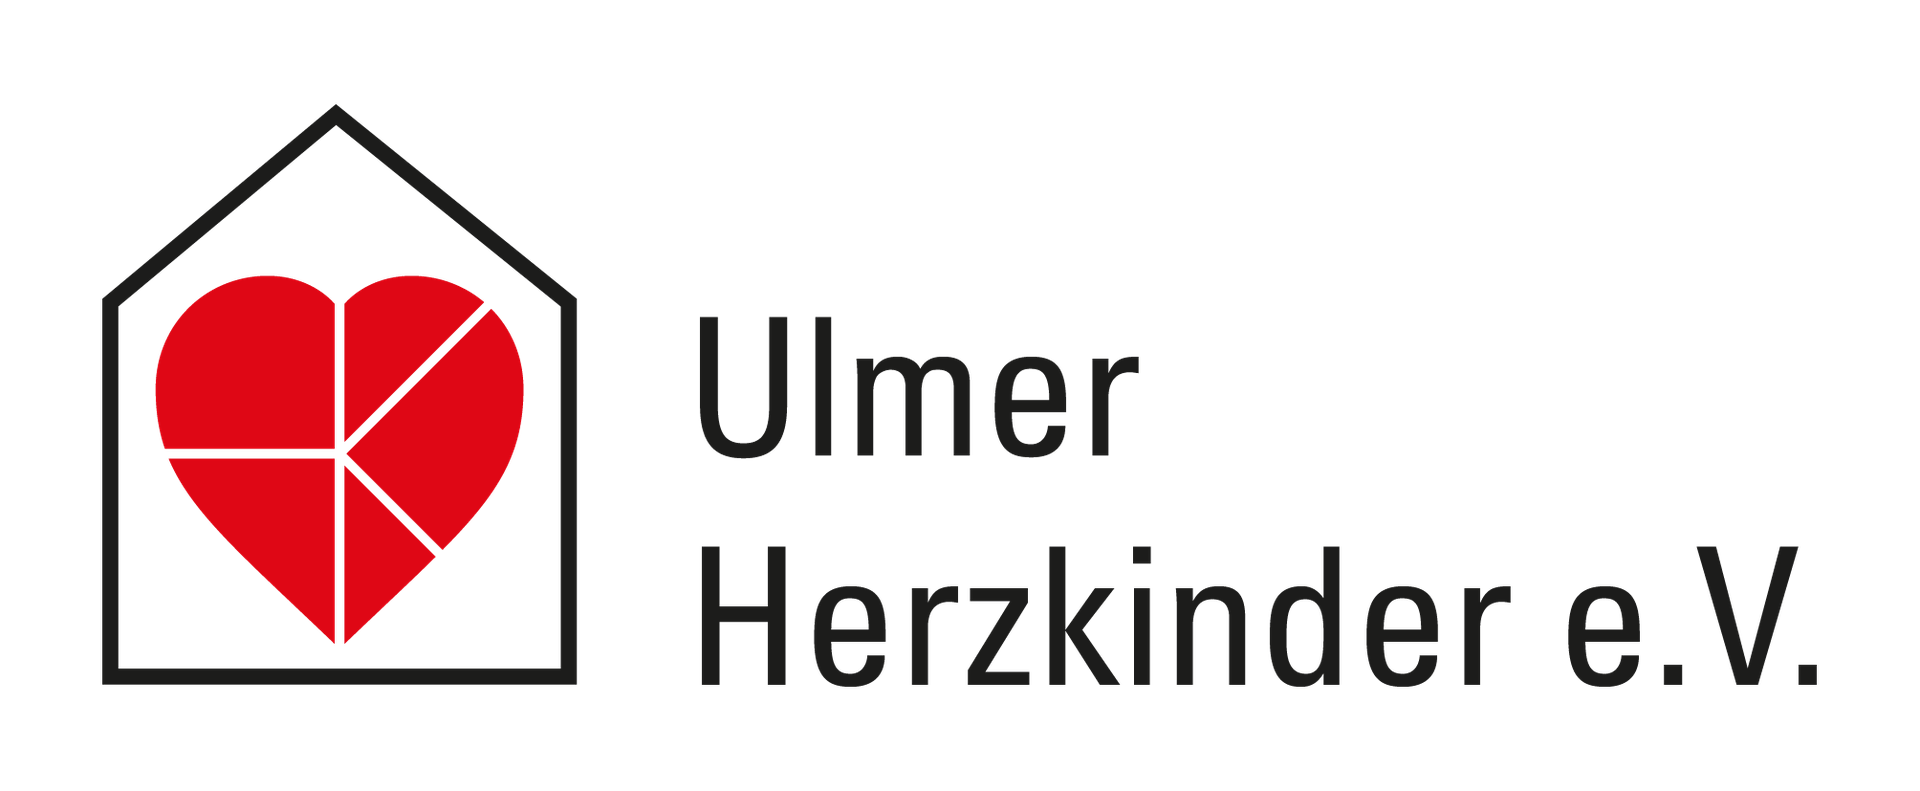 (c) Ulmer-herzkinder.eu